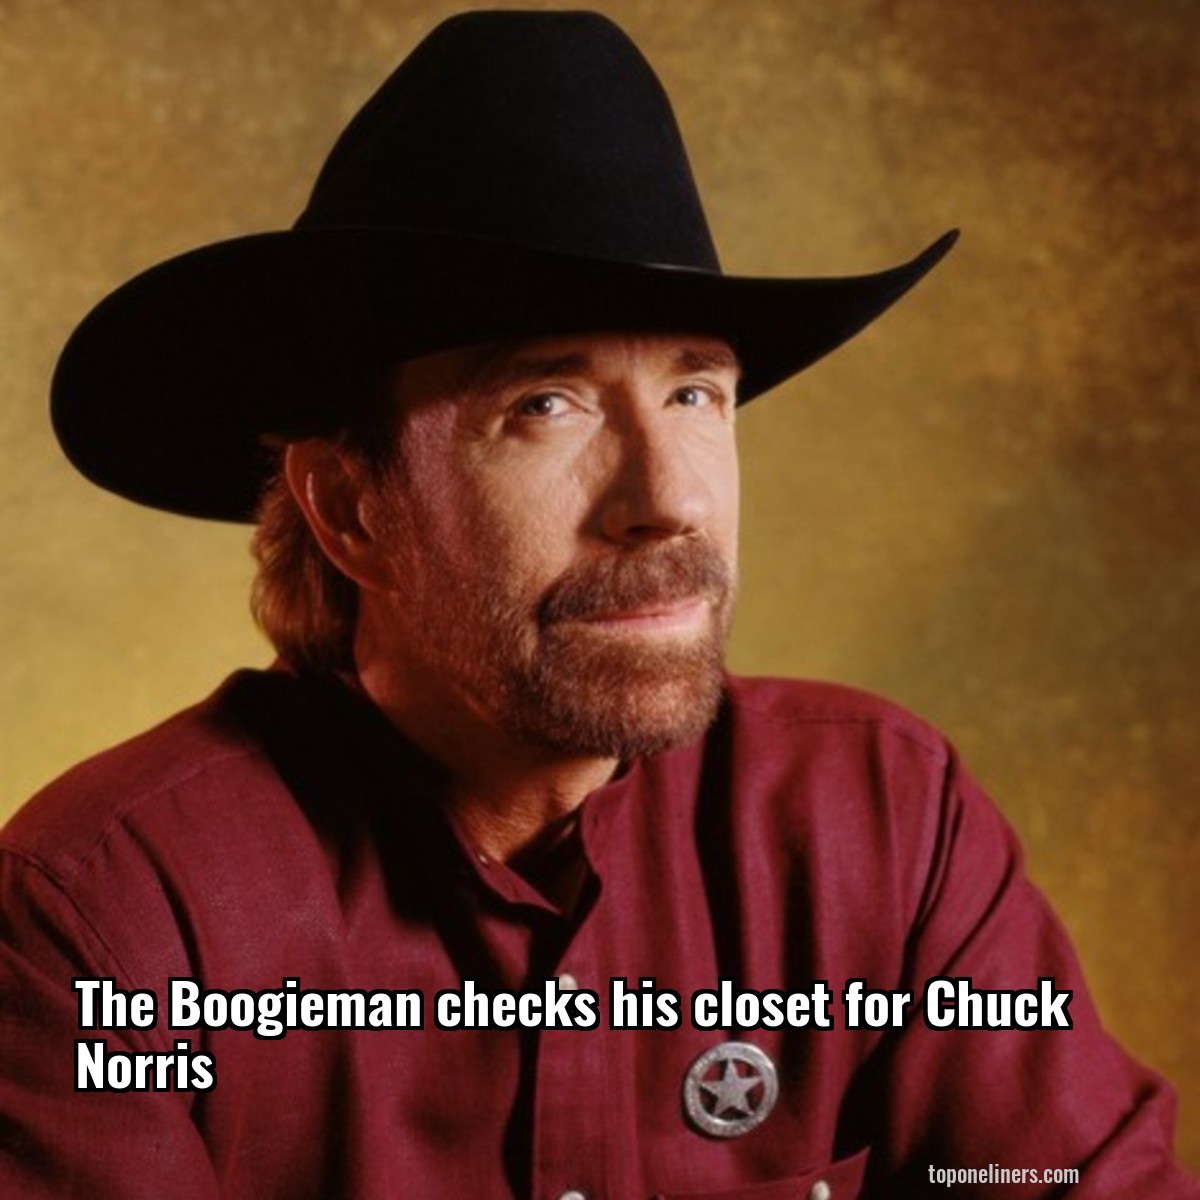 The Boogieman checks his closet for Chuck Norris